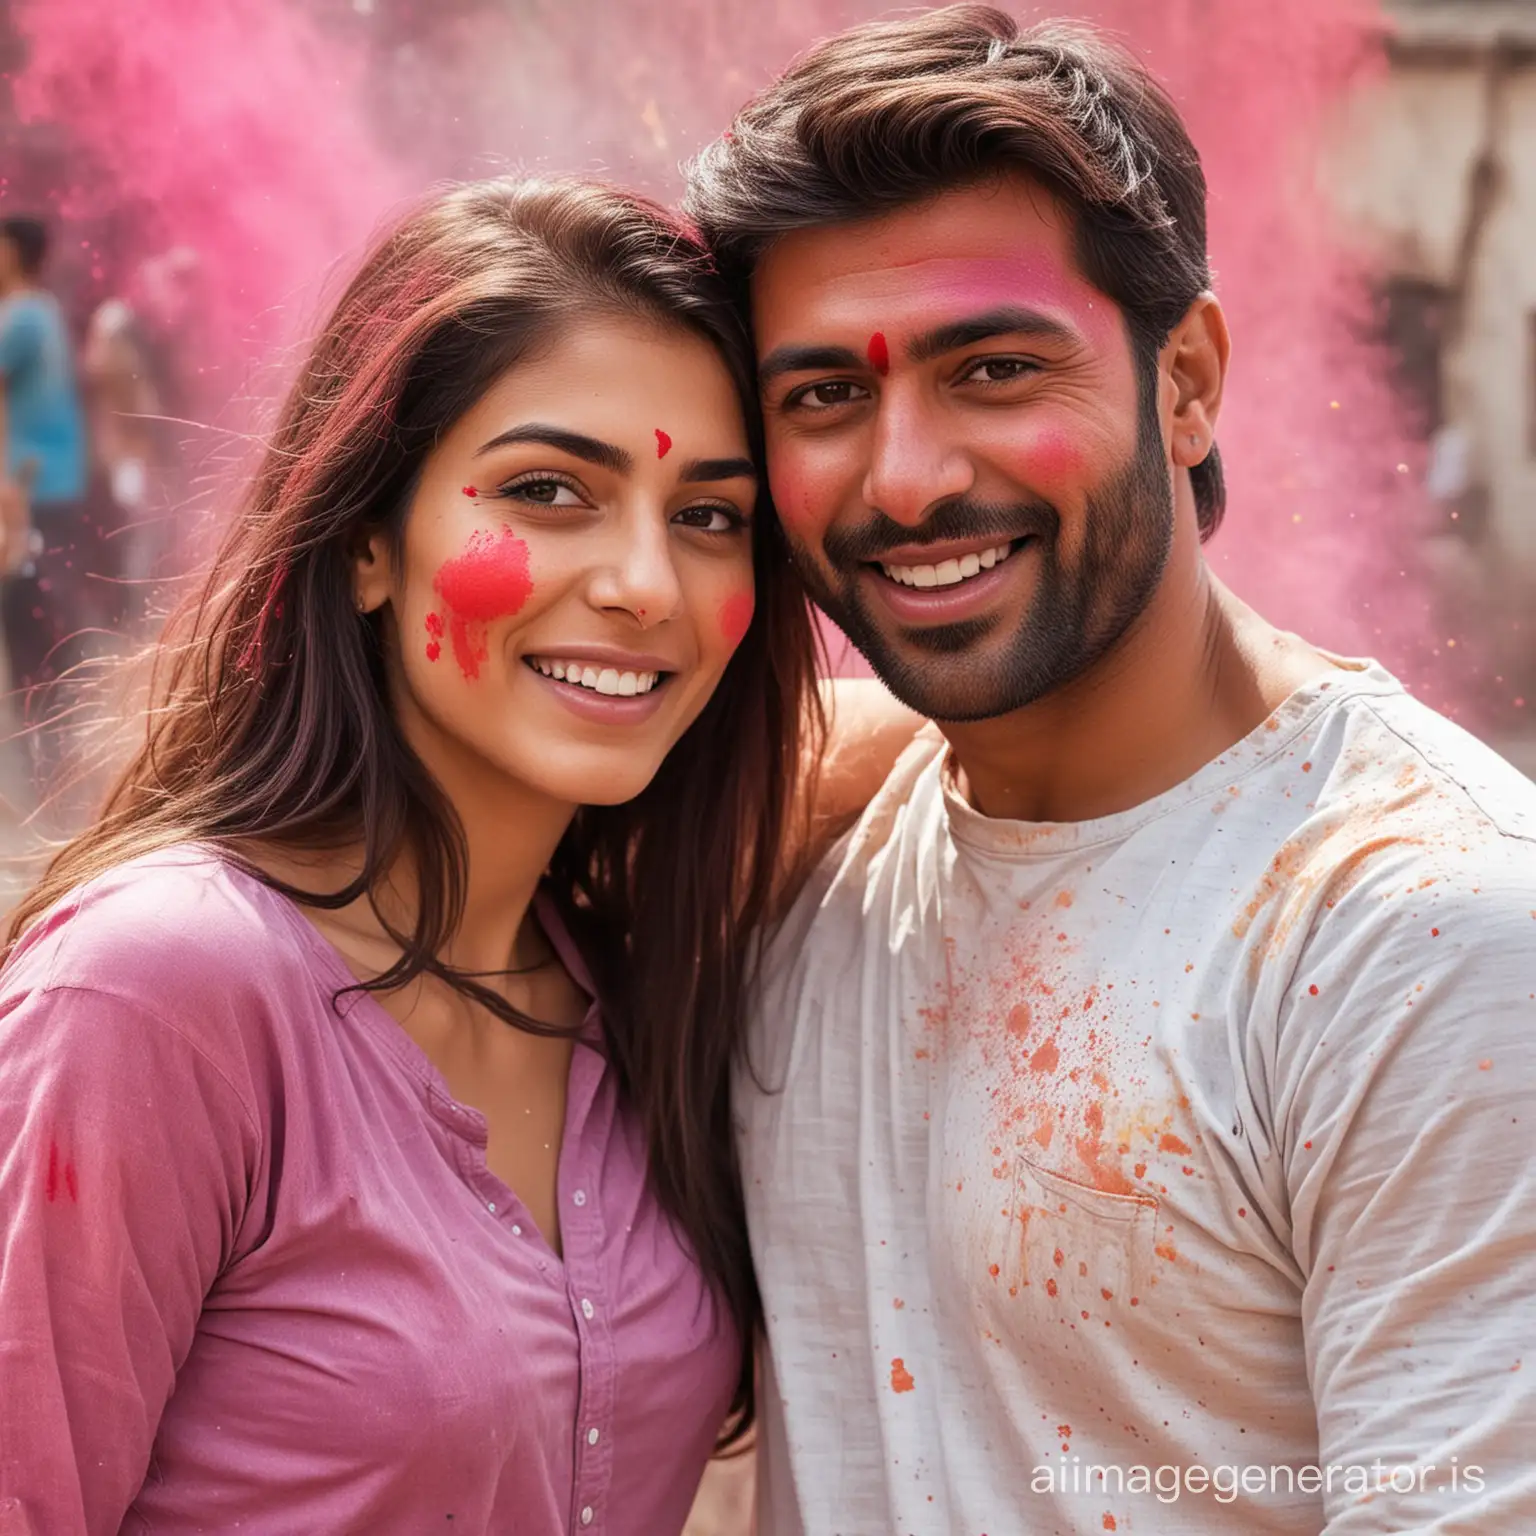 Joyful-Holi-Celebration-Attractive-Couple-Enjoying-the-Festival-of-Colors